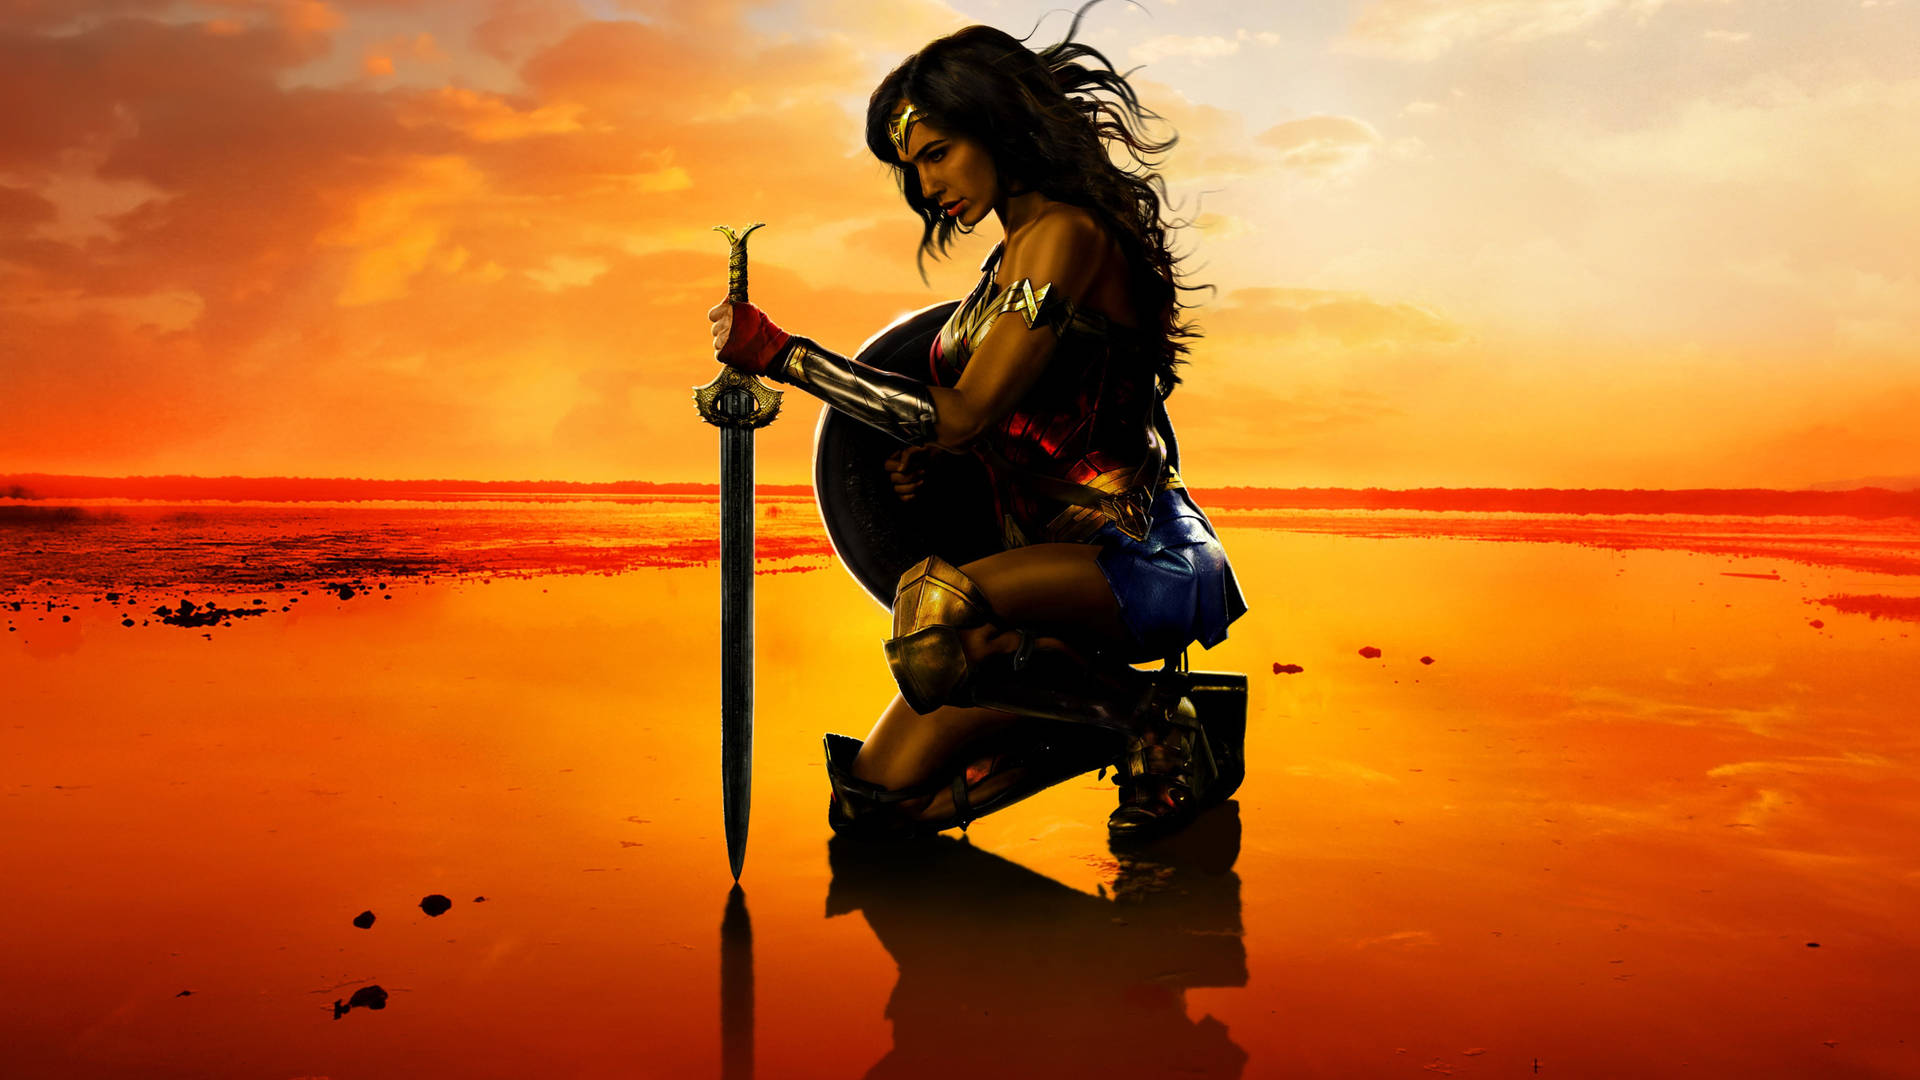 Wonder Woman Digital Movie Cover wallpaper